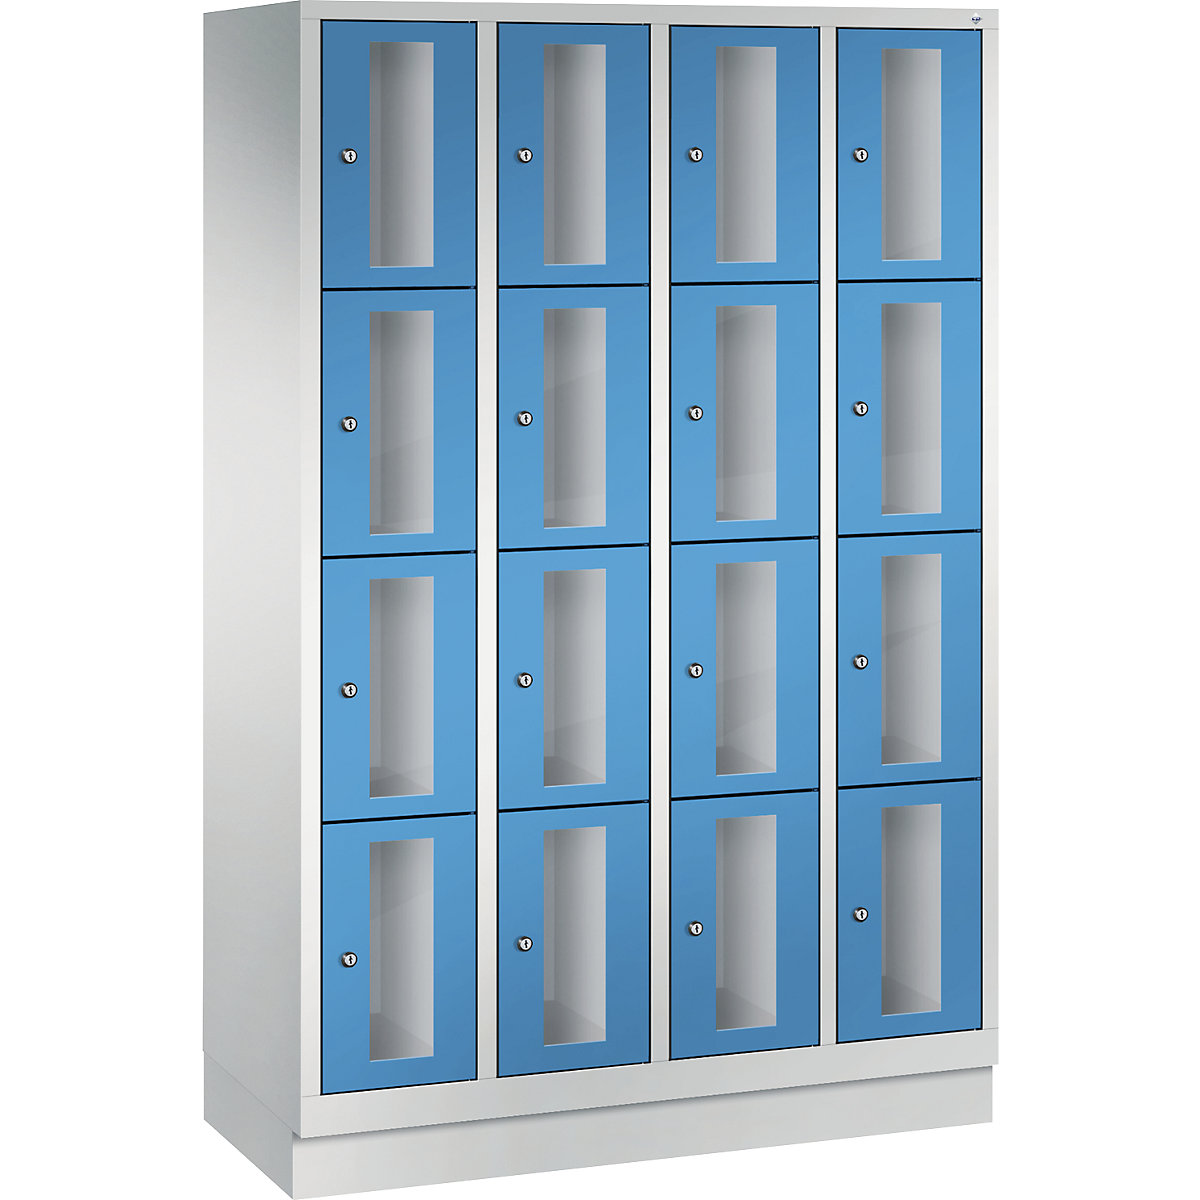 C+P – Armario de compartimentos CLASSIC, altura de compartimento 375 mm, con zócalo, 16 compartimentos, 1190 mm de anchura, puerta en azul luminoso